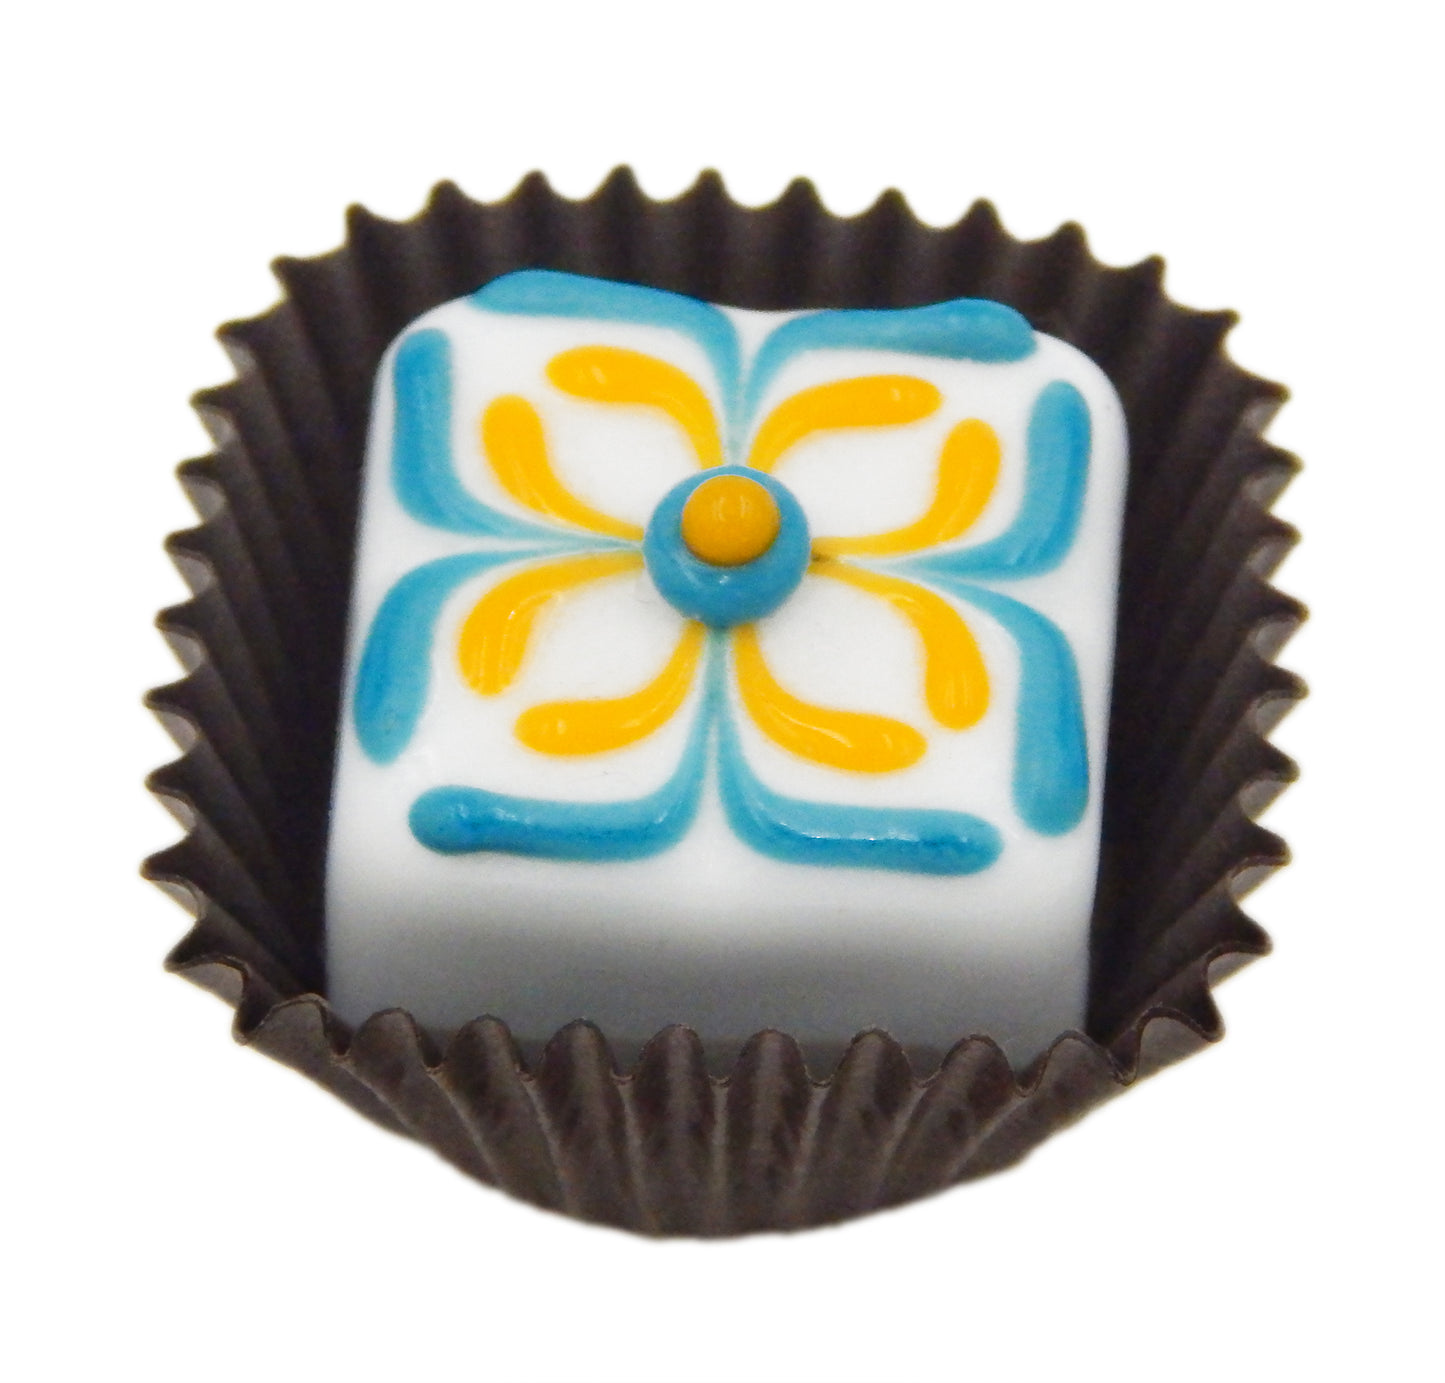 White Chocolate Treat with Turquoise & Mango Design (18-060WQG)